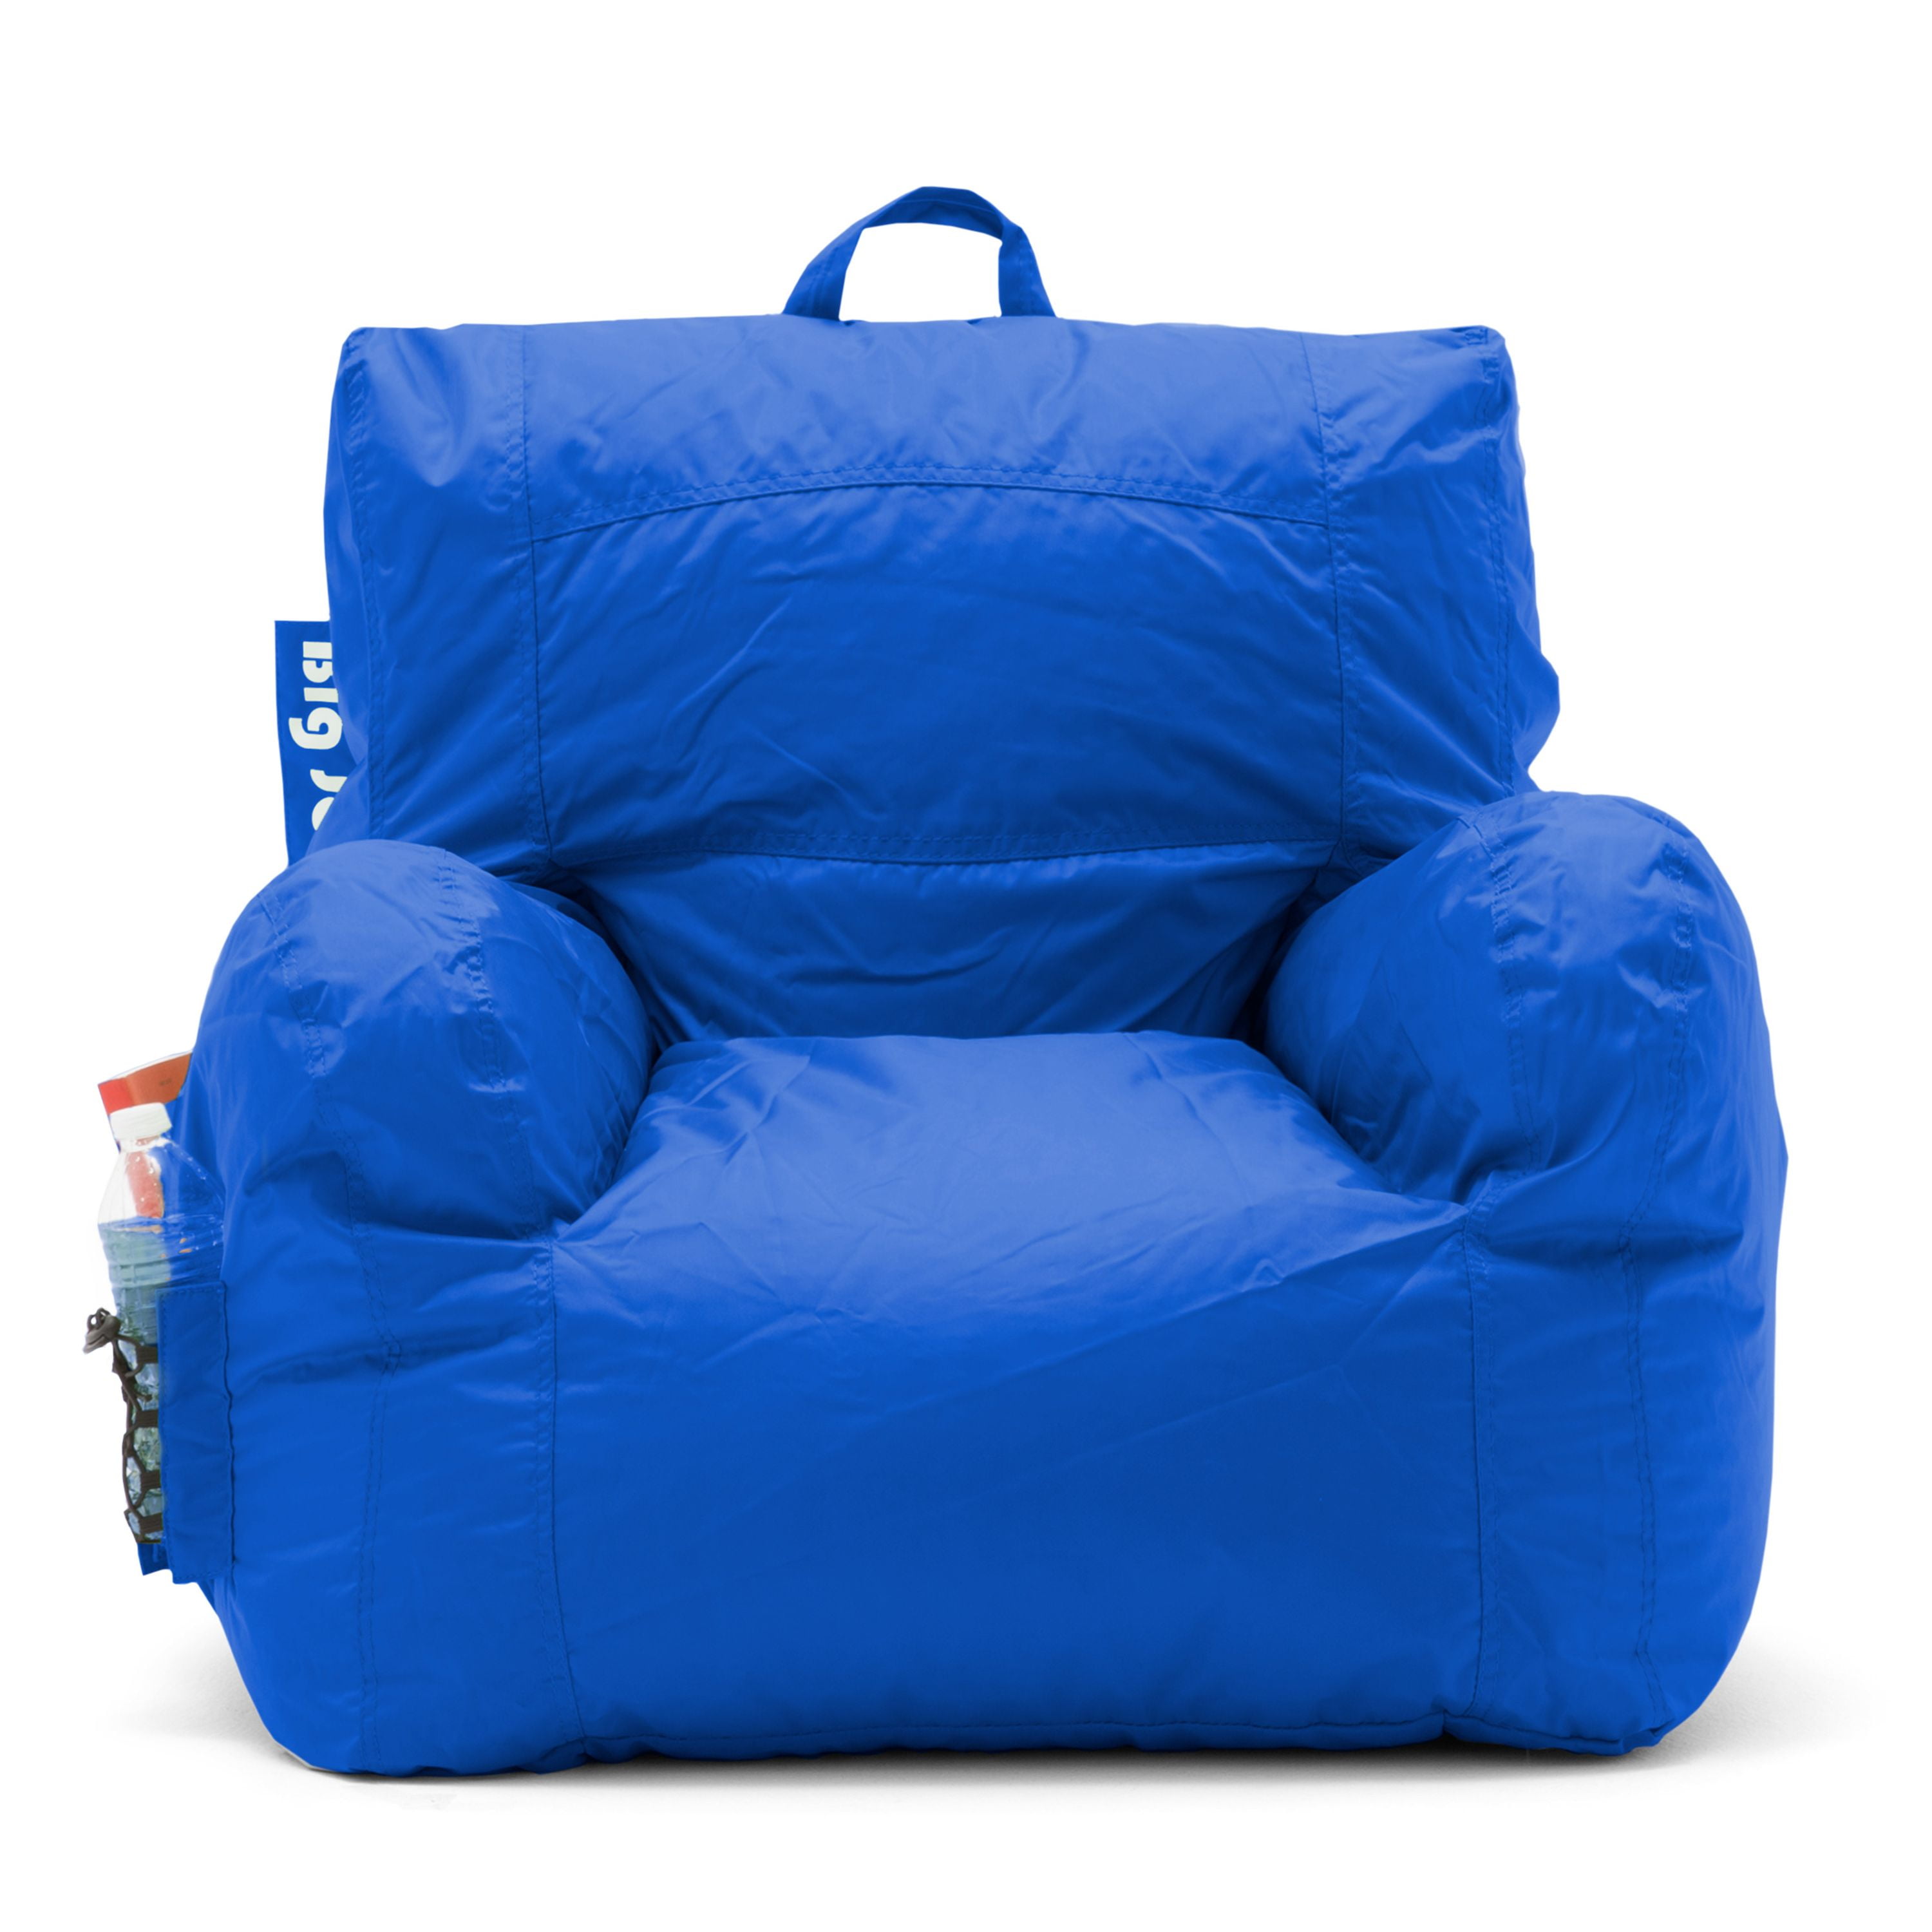 Durable Big Joe Bean Bag Chair for Kids with Guam